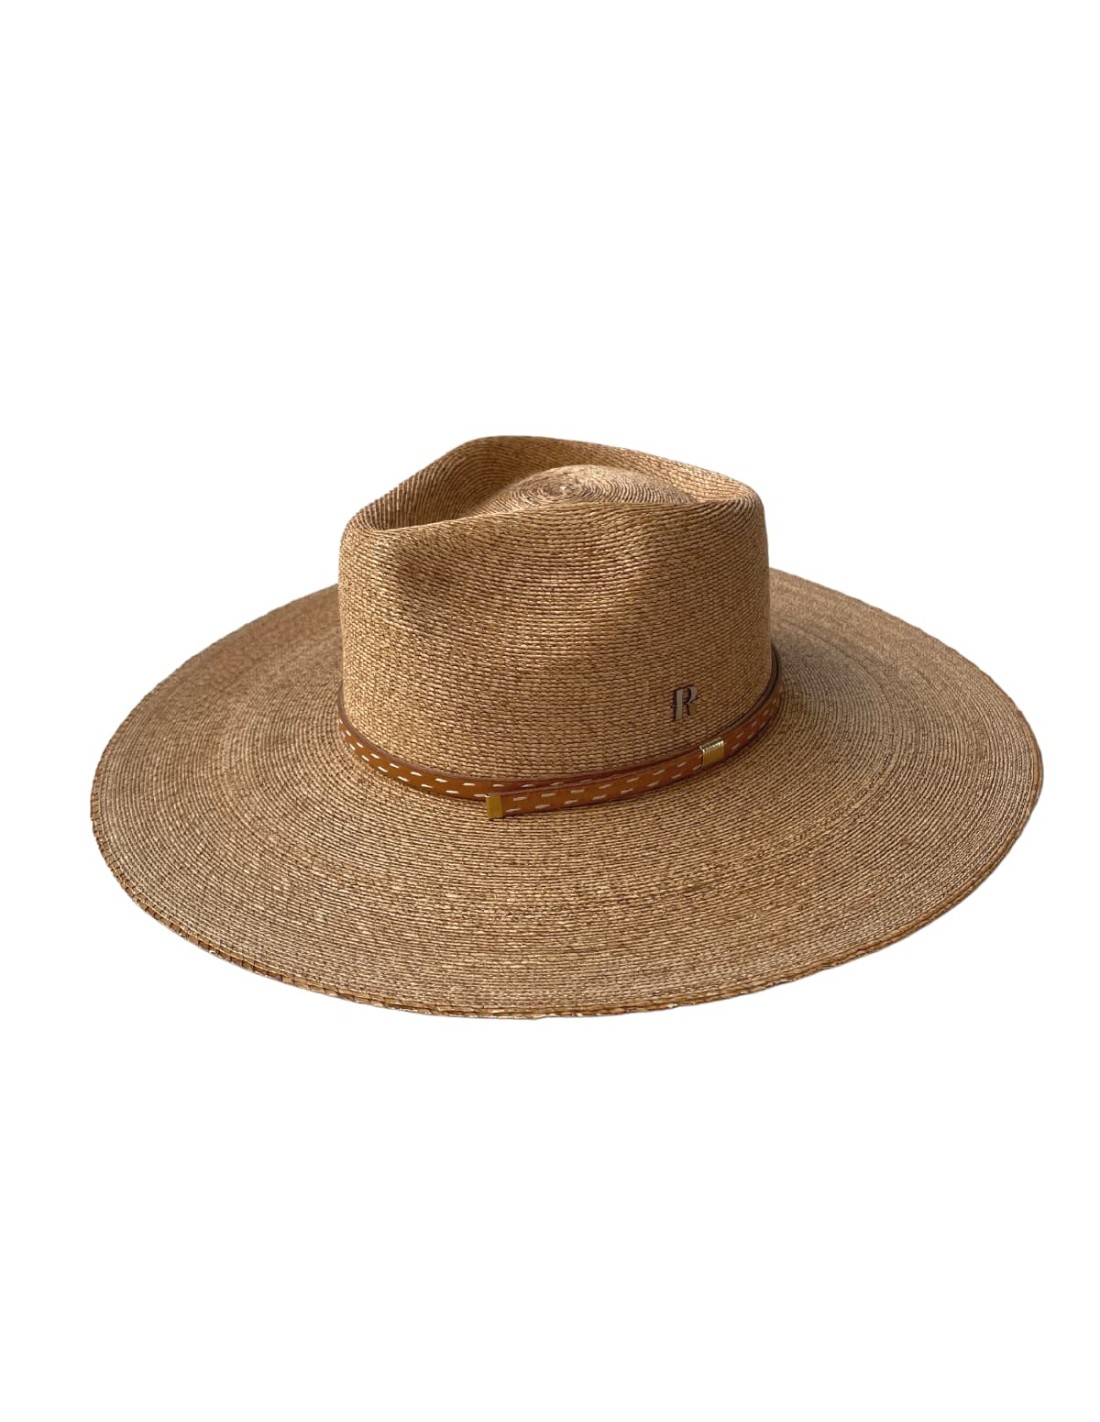 Shop Fedora Hat Wide-Brimmed for Men Amalfi - Men's Hats - Raceu Hats